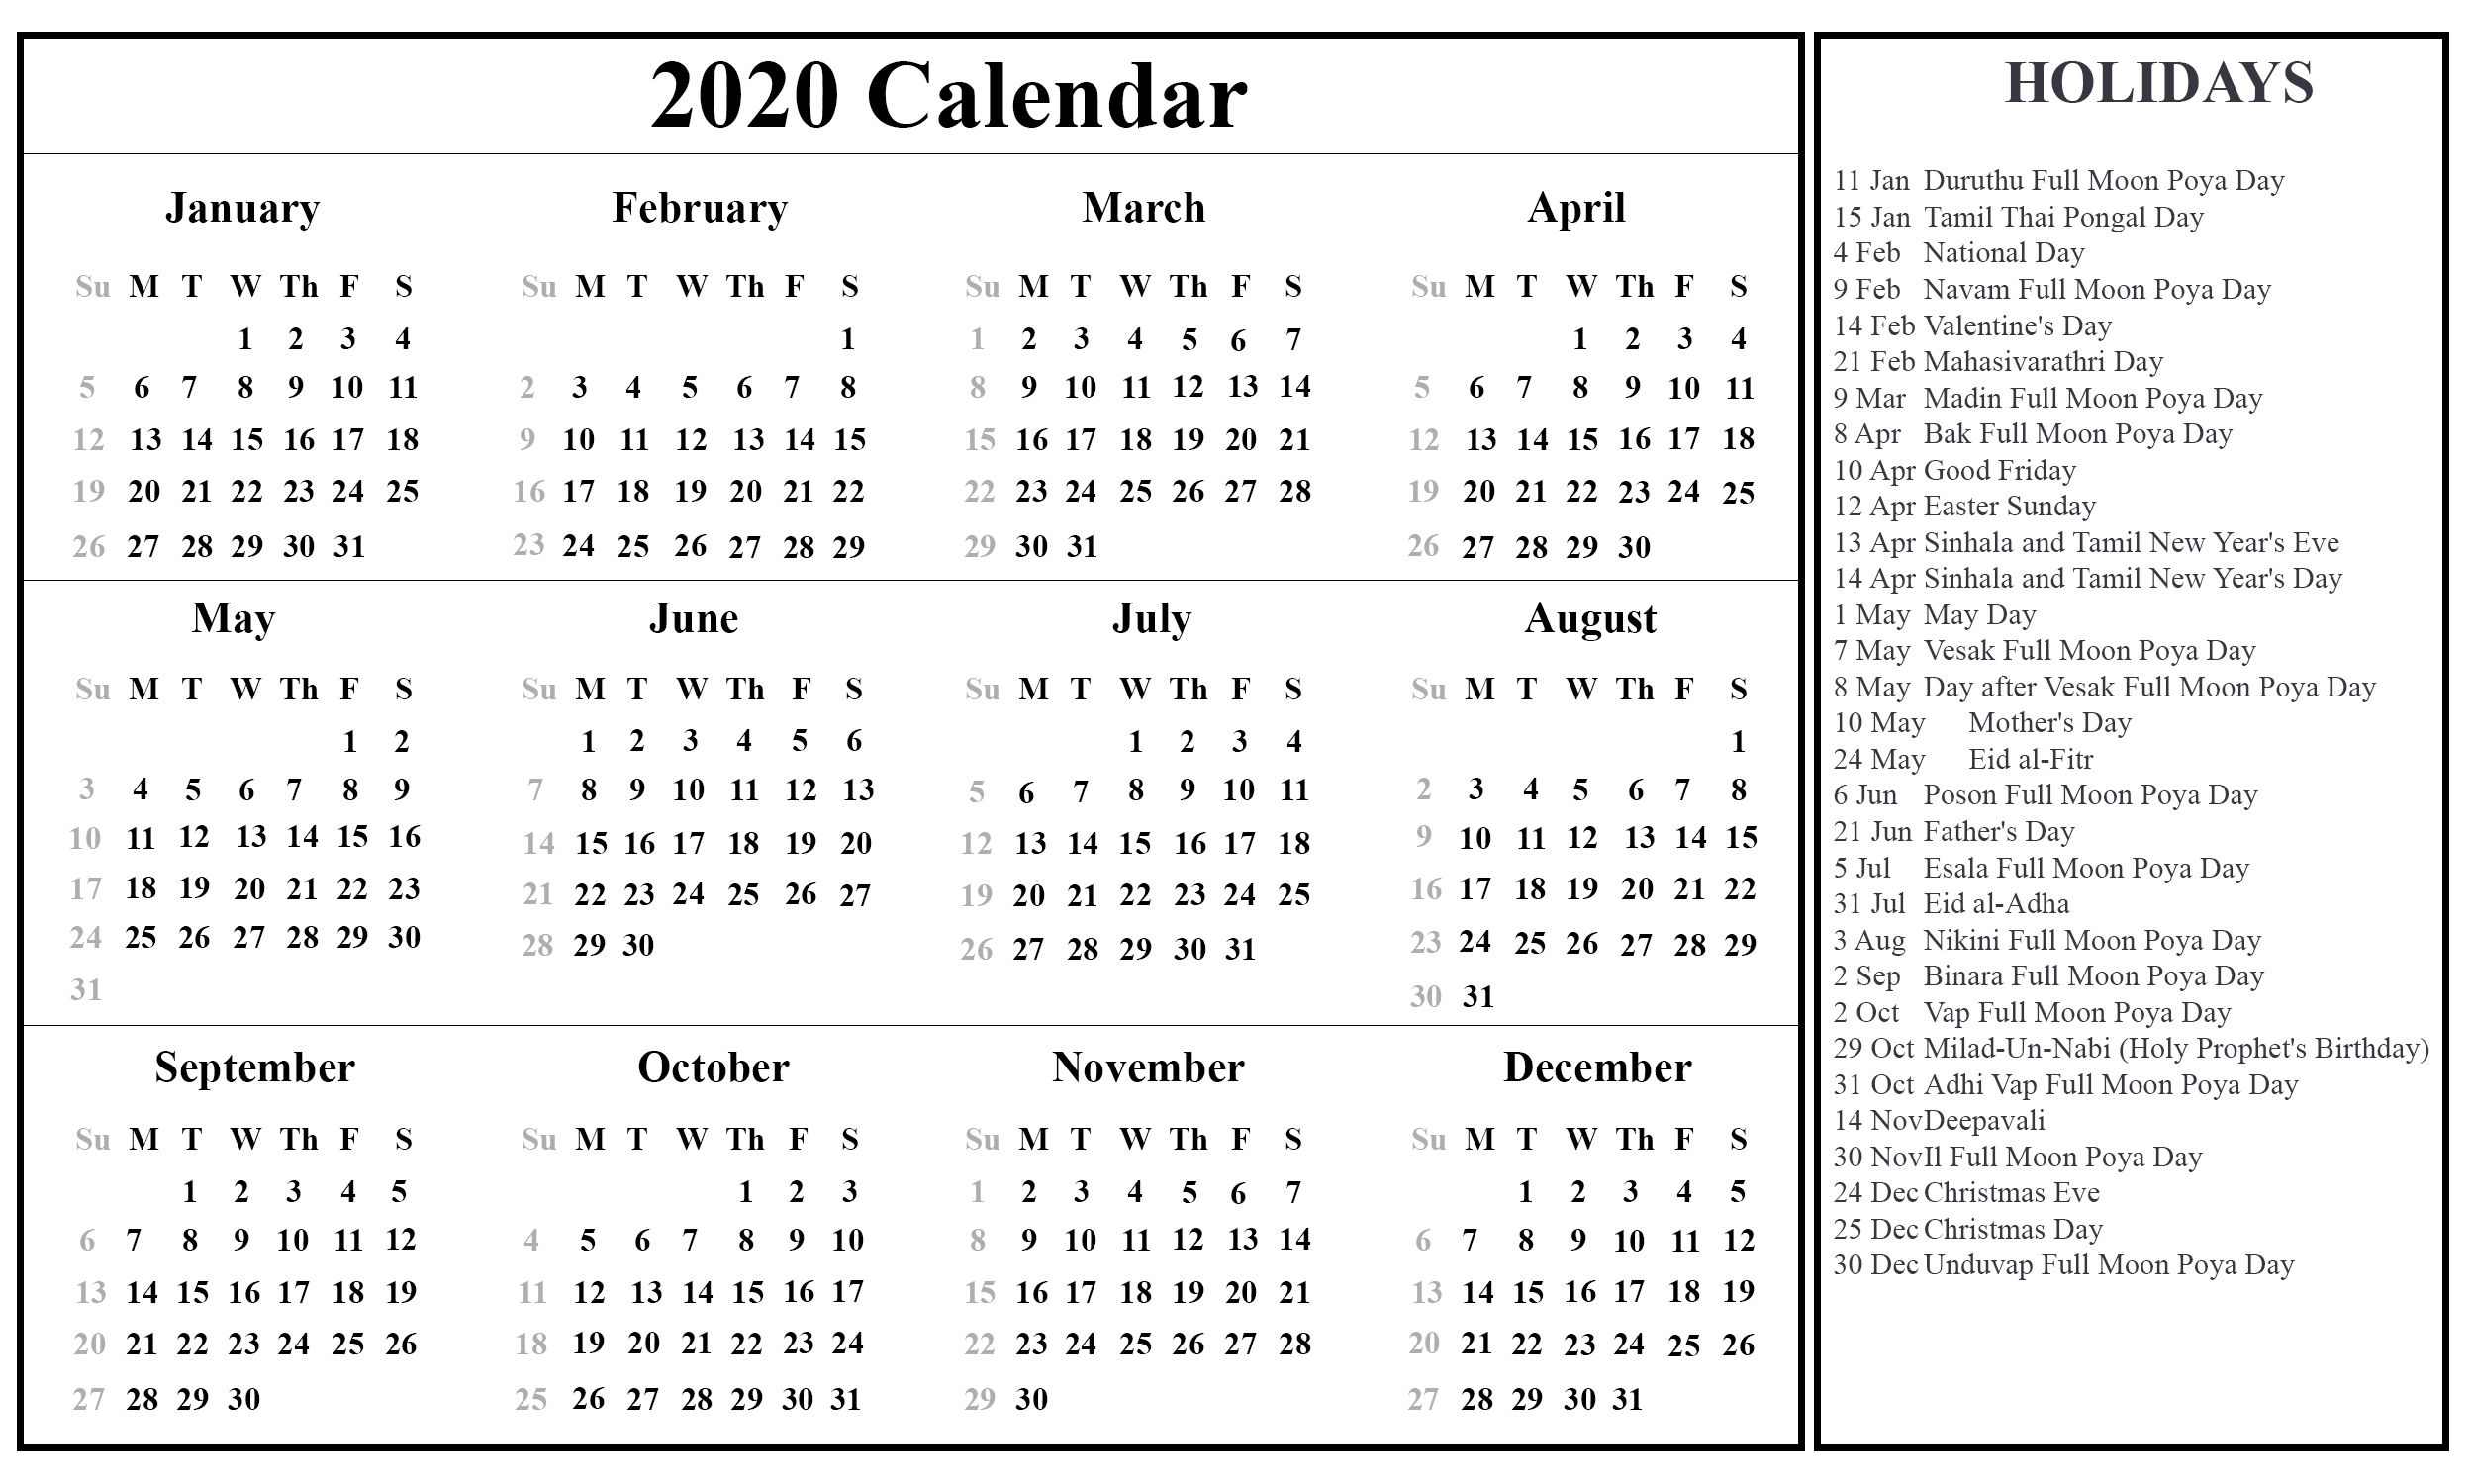 Free Printable Sri Lanka Calendar 2020 With Holidays In Pdf-January 2020 Calendar Urdu